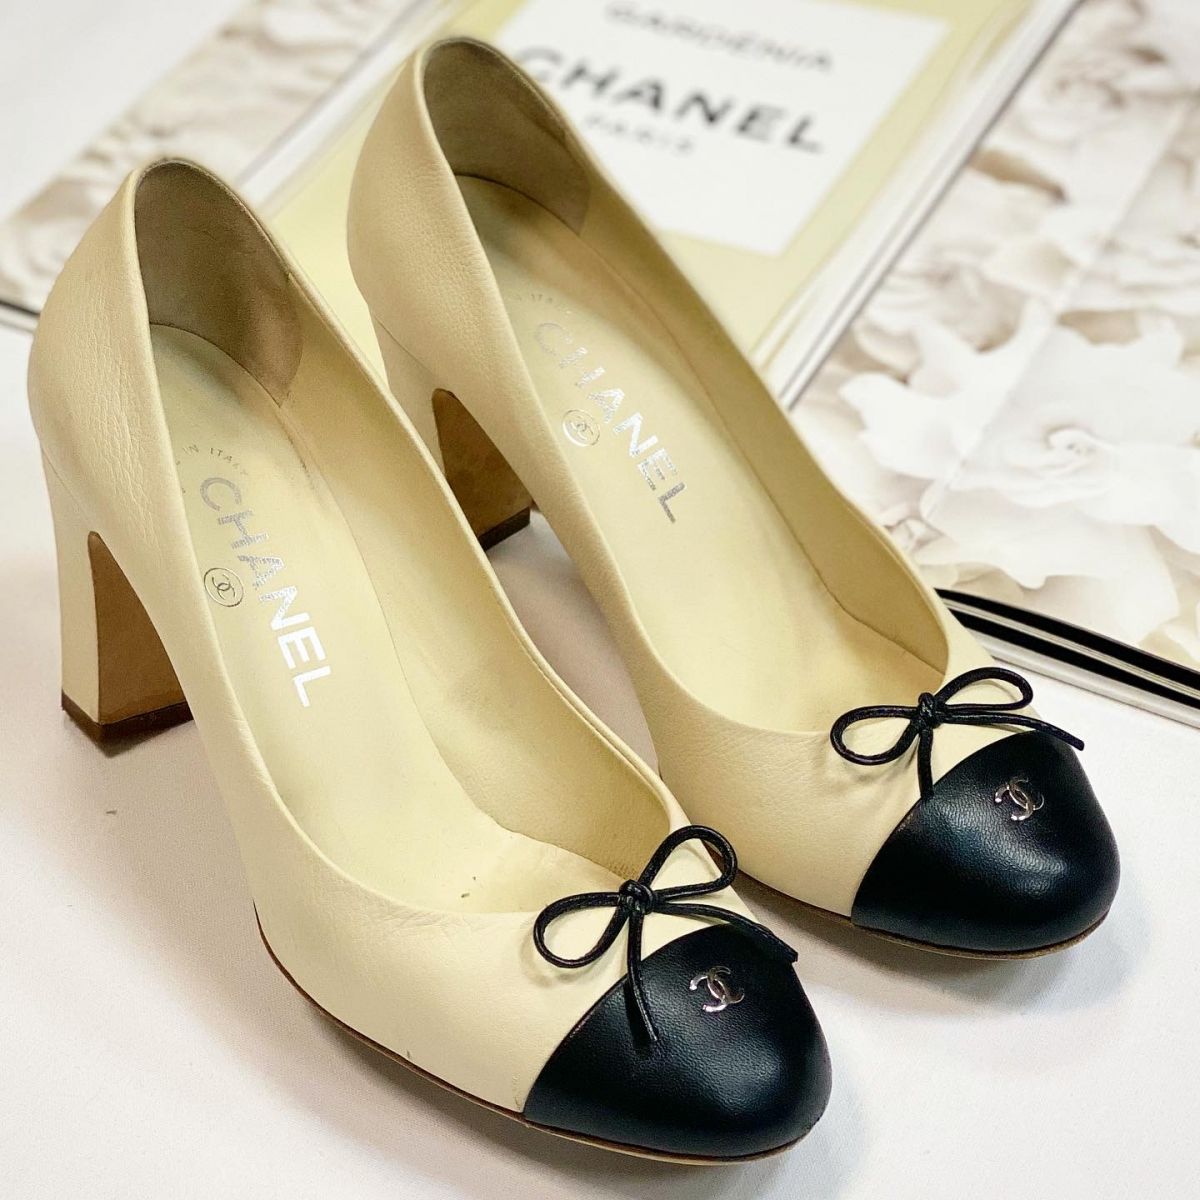 Туфли Chanel размер 38 цена 15 385 руб 